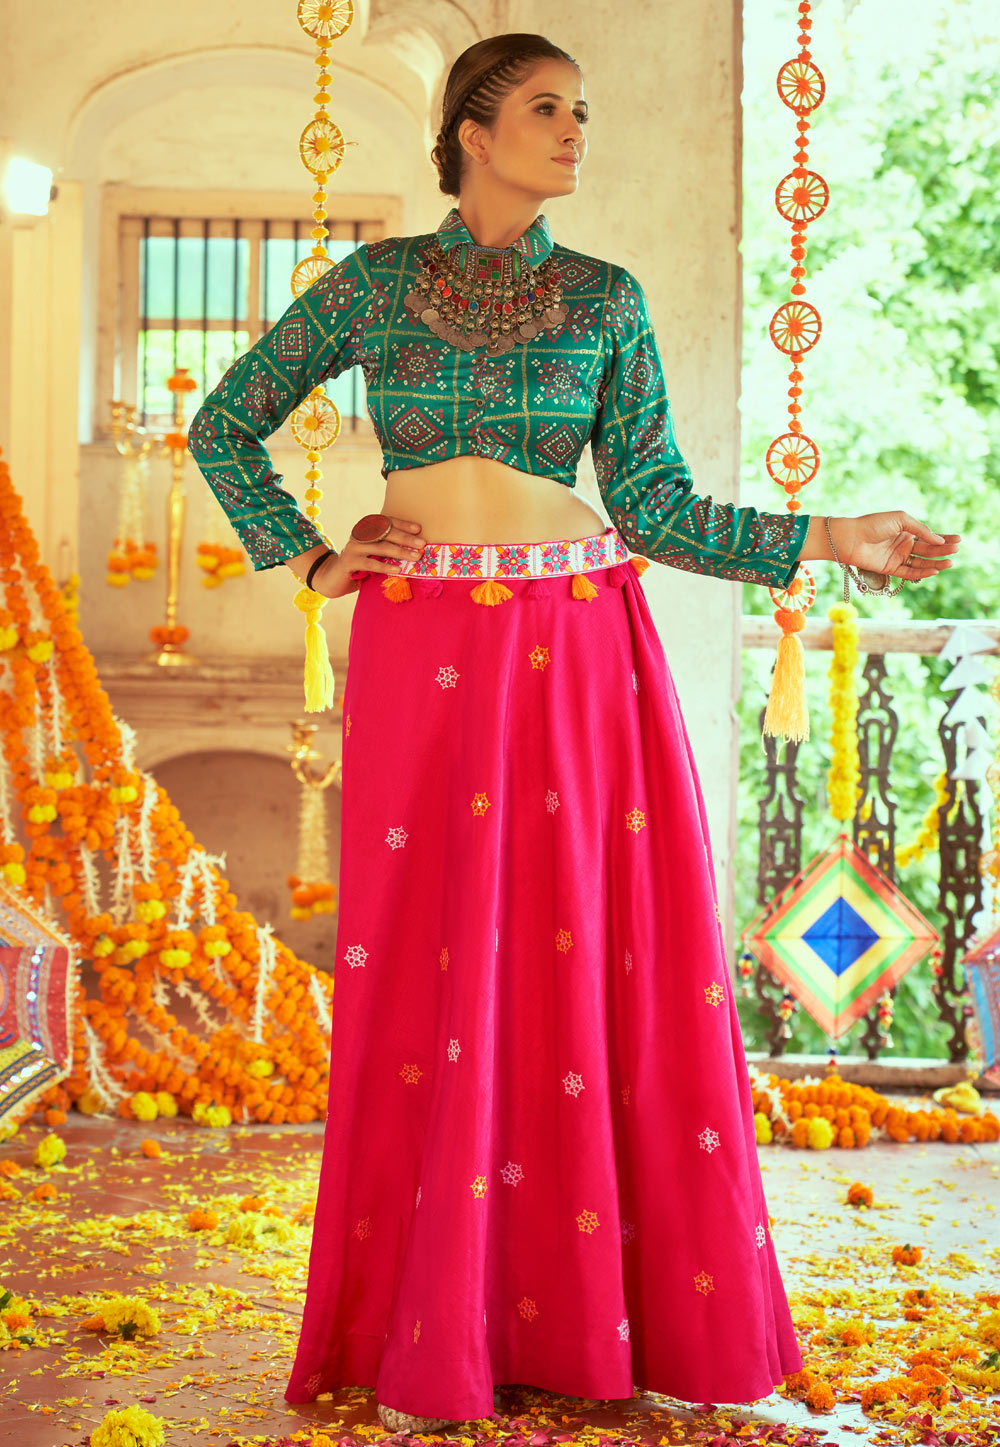 Santoshi Shetty Stuns in Newest Fashion rage Crop Top Lehenga from Siddhi  Karwa x Kalki | Kalki Fashion Blogs